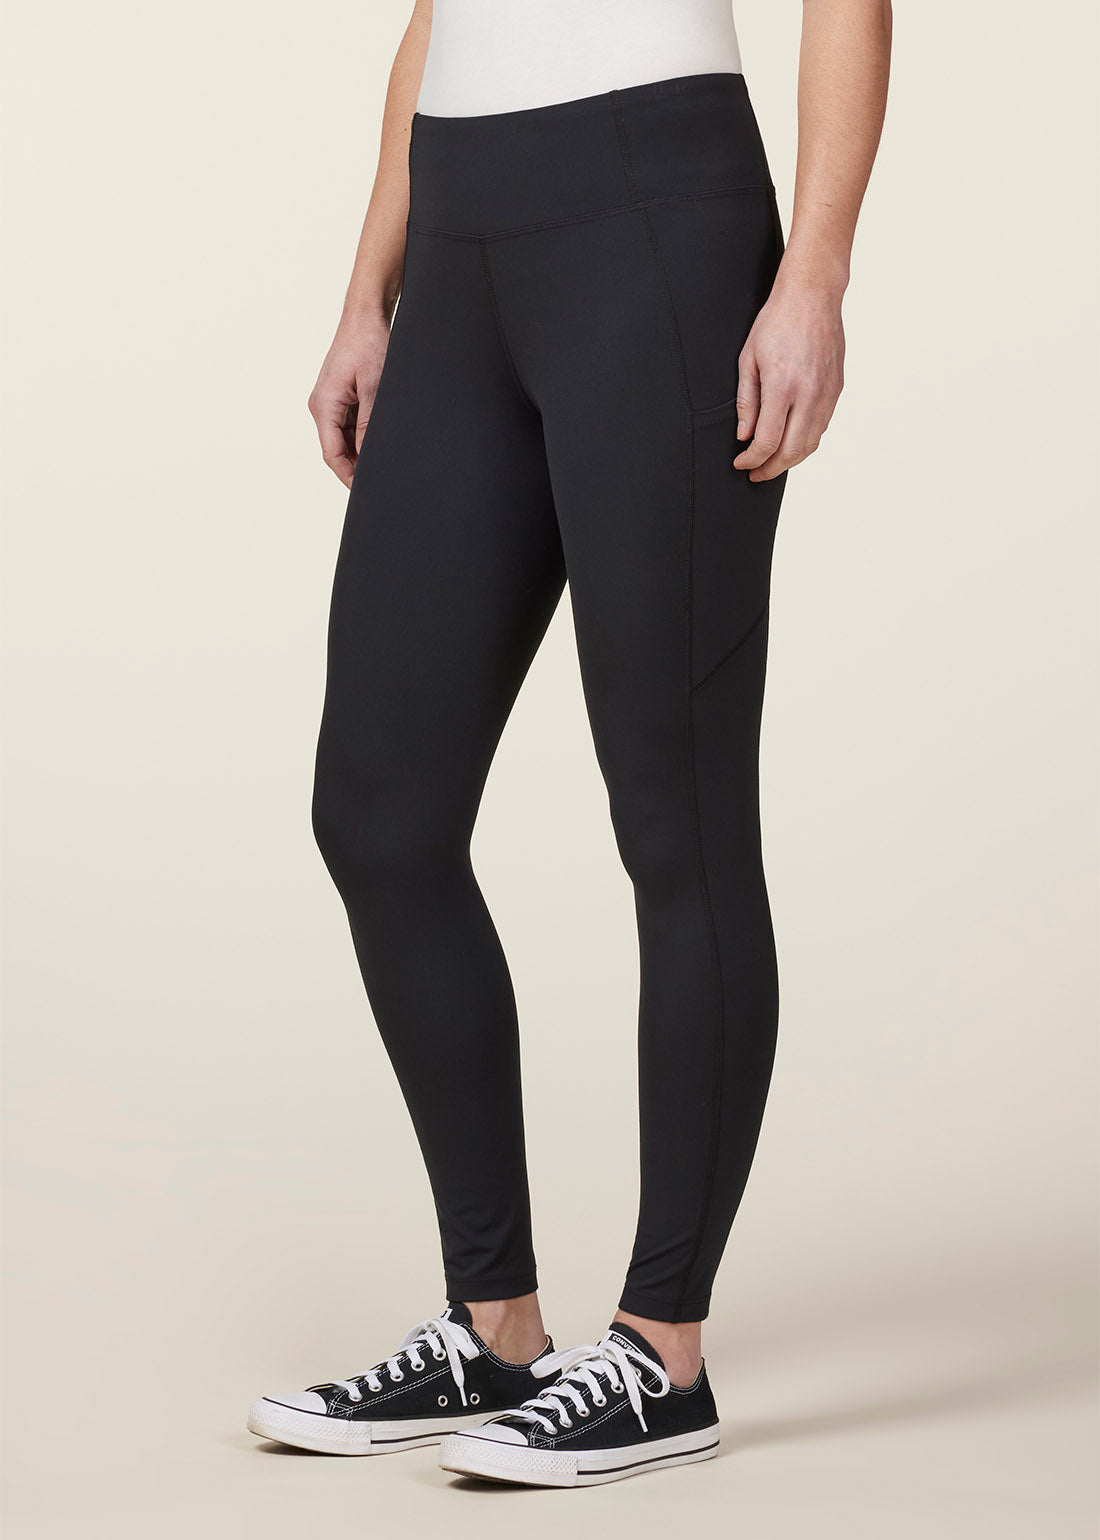 Sexy Solid Regular Black Plus Size Leggings (Women's) - Walmart.com